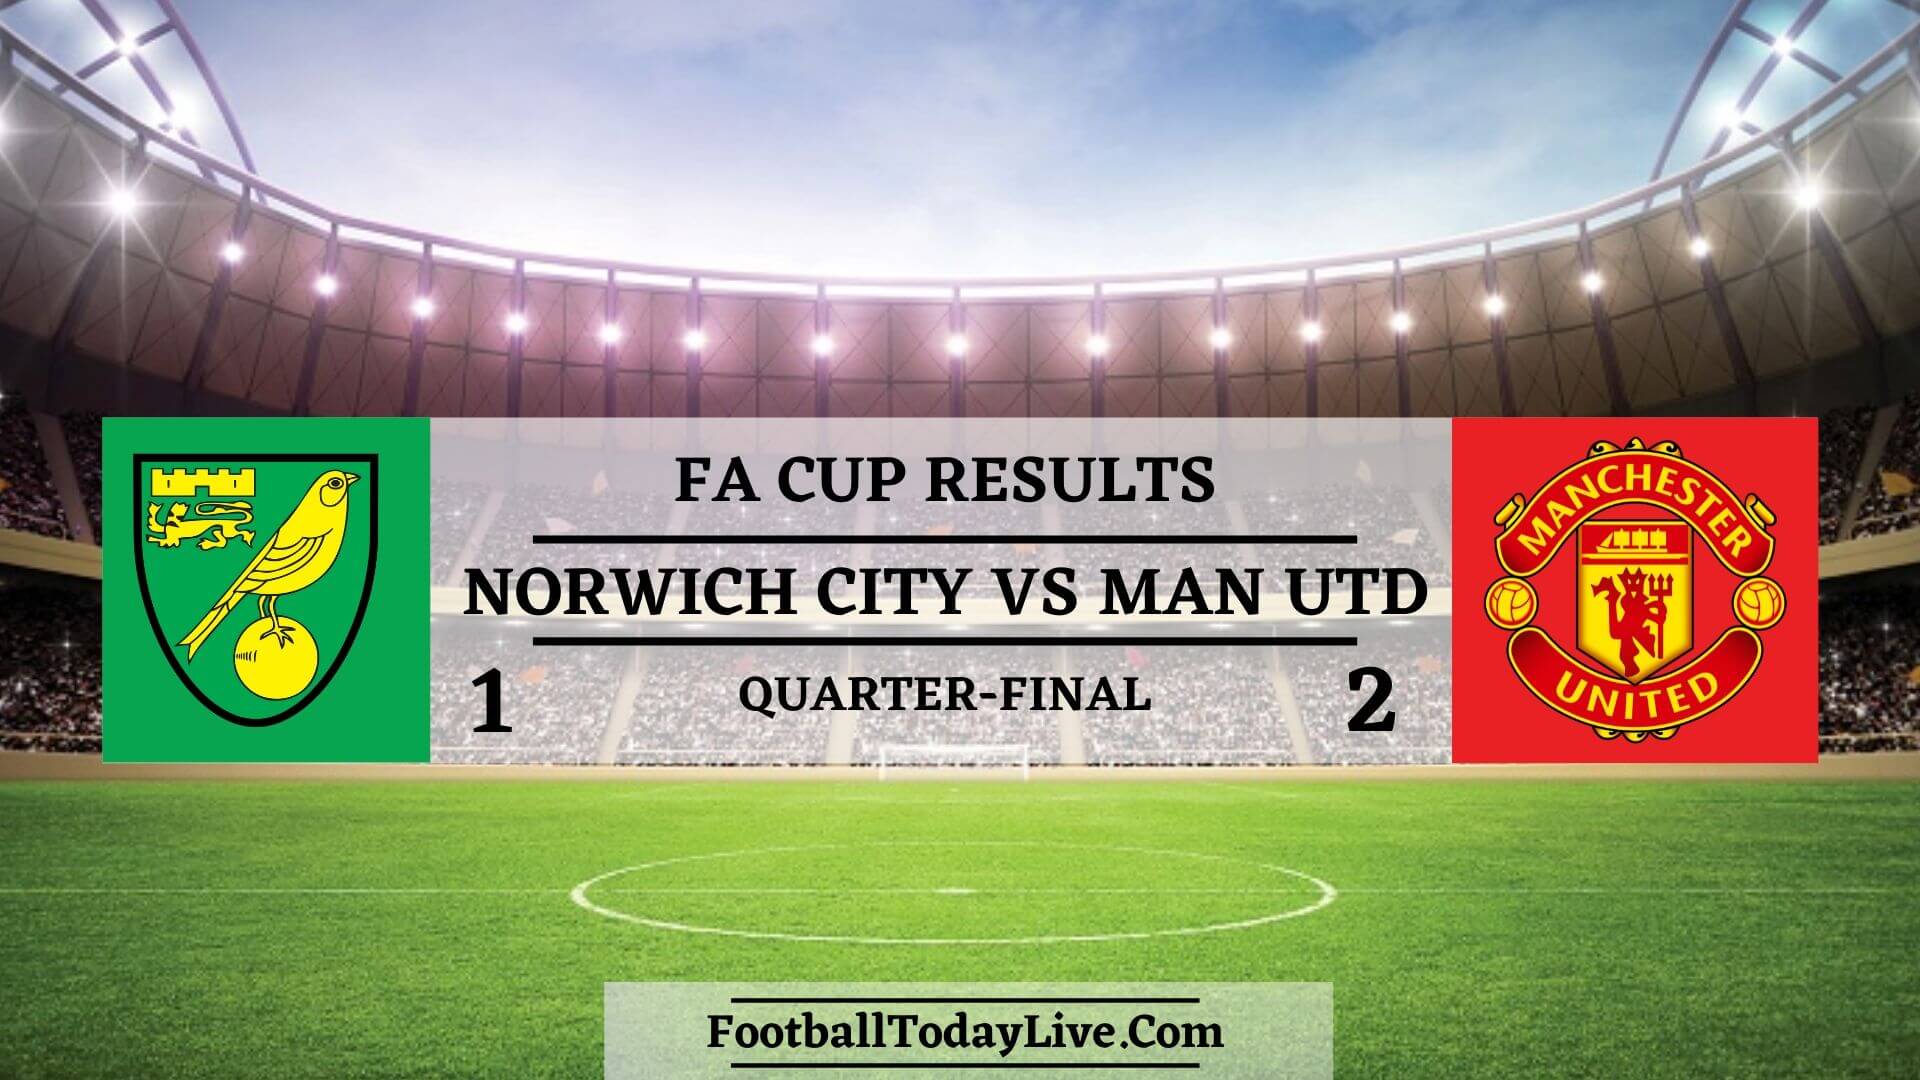 Norwich City Vs Manchester United | FA Cup Quarter-Final Result 2020